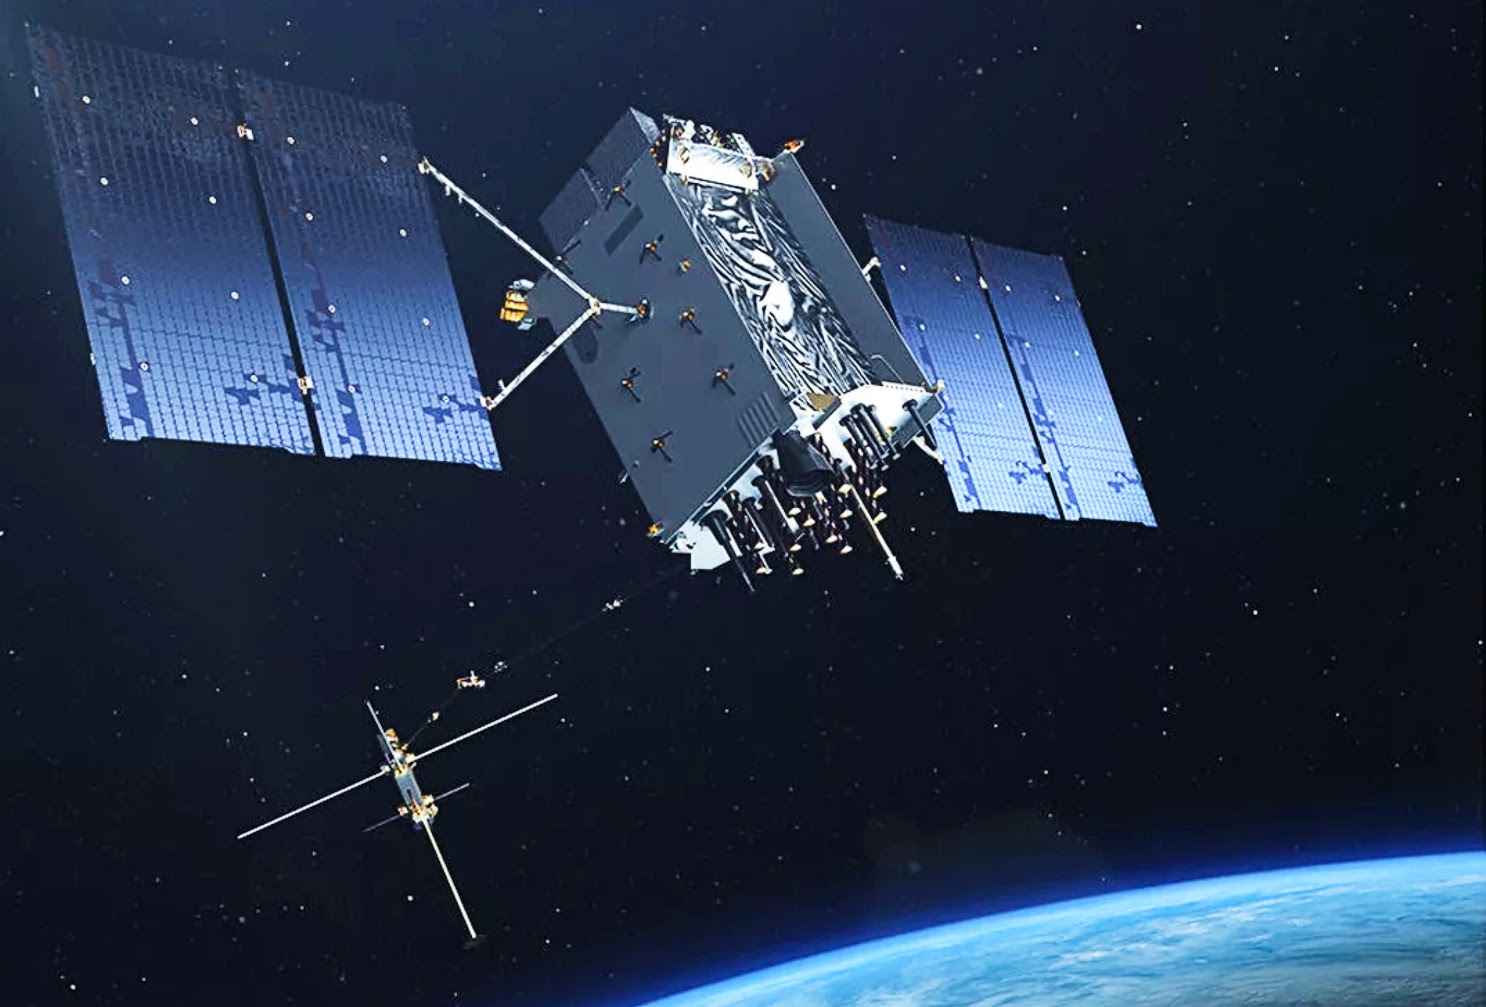 Spy satellites orbit the earth twice a day